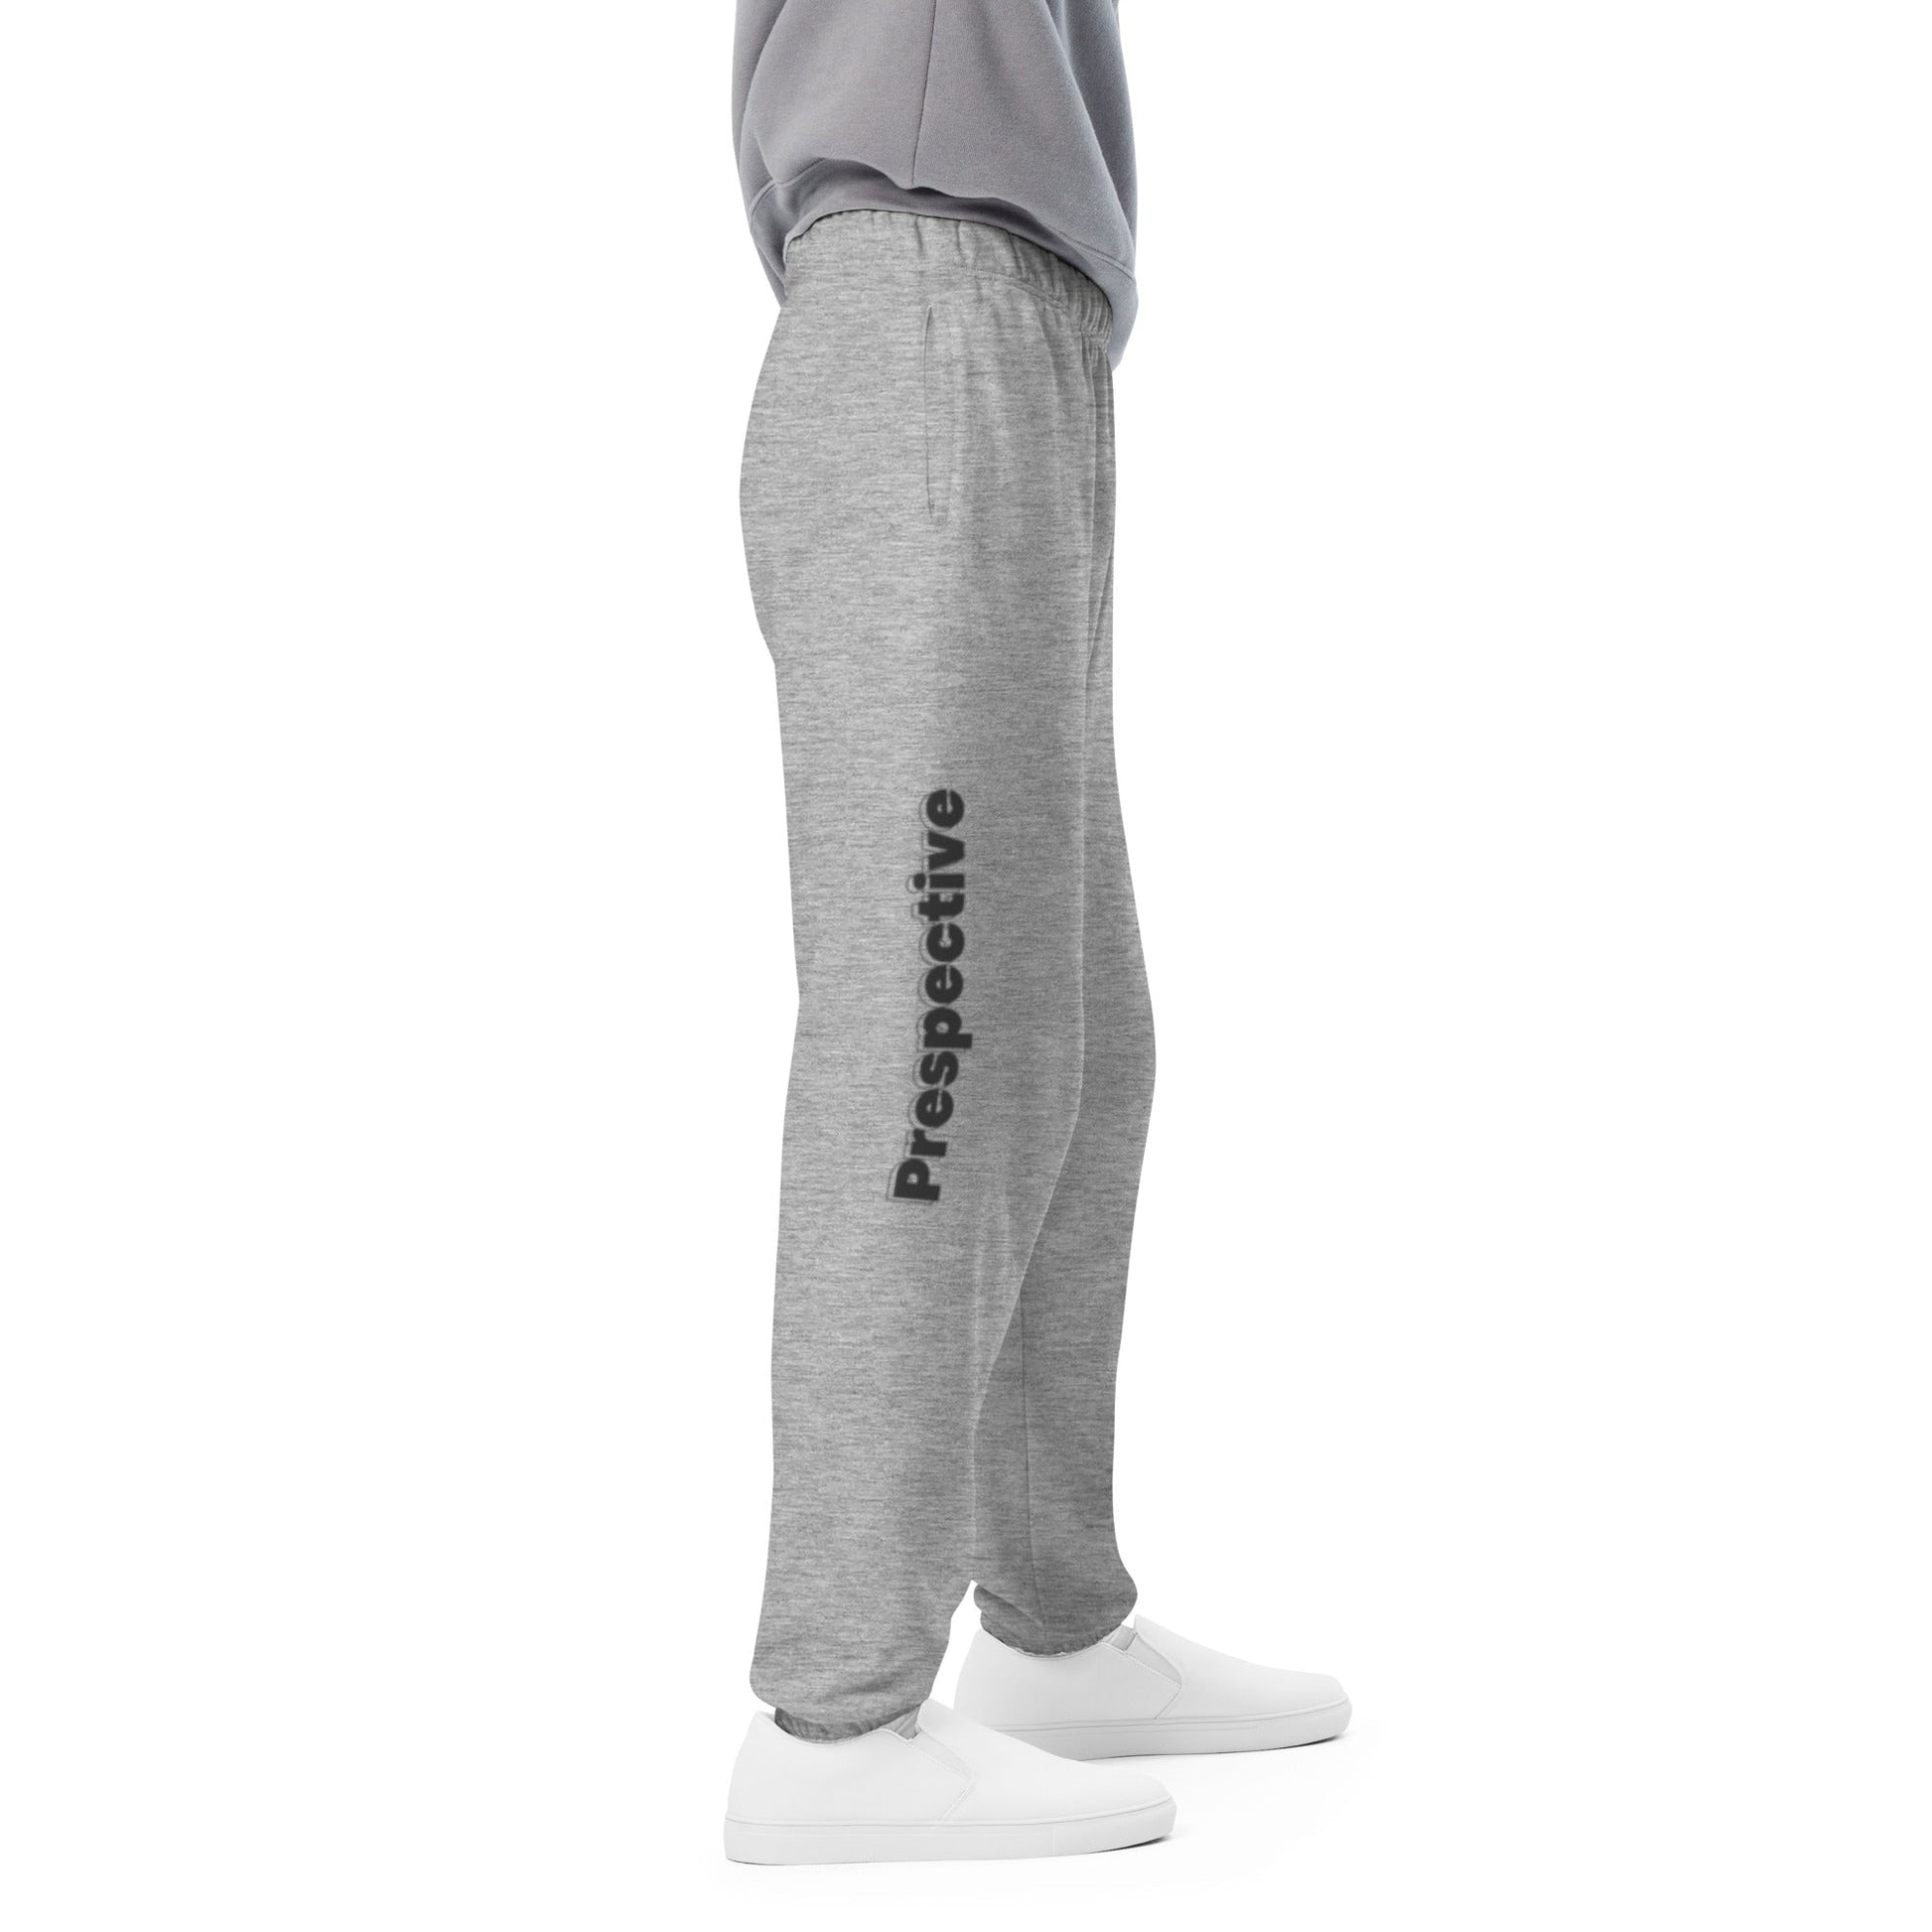 BlackMars comfort sweatpants - Premium  from BlackMars  - Just £25.50! Shop now at BlackMars 25.50BlackMars 